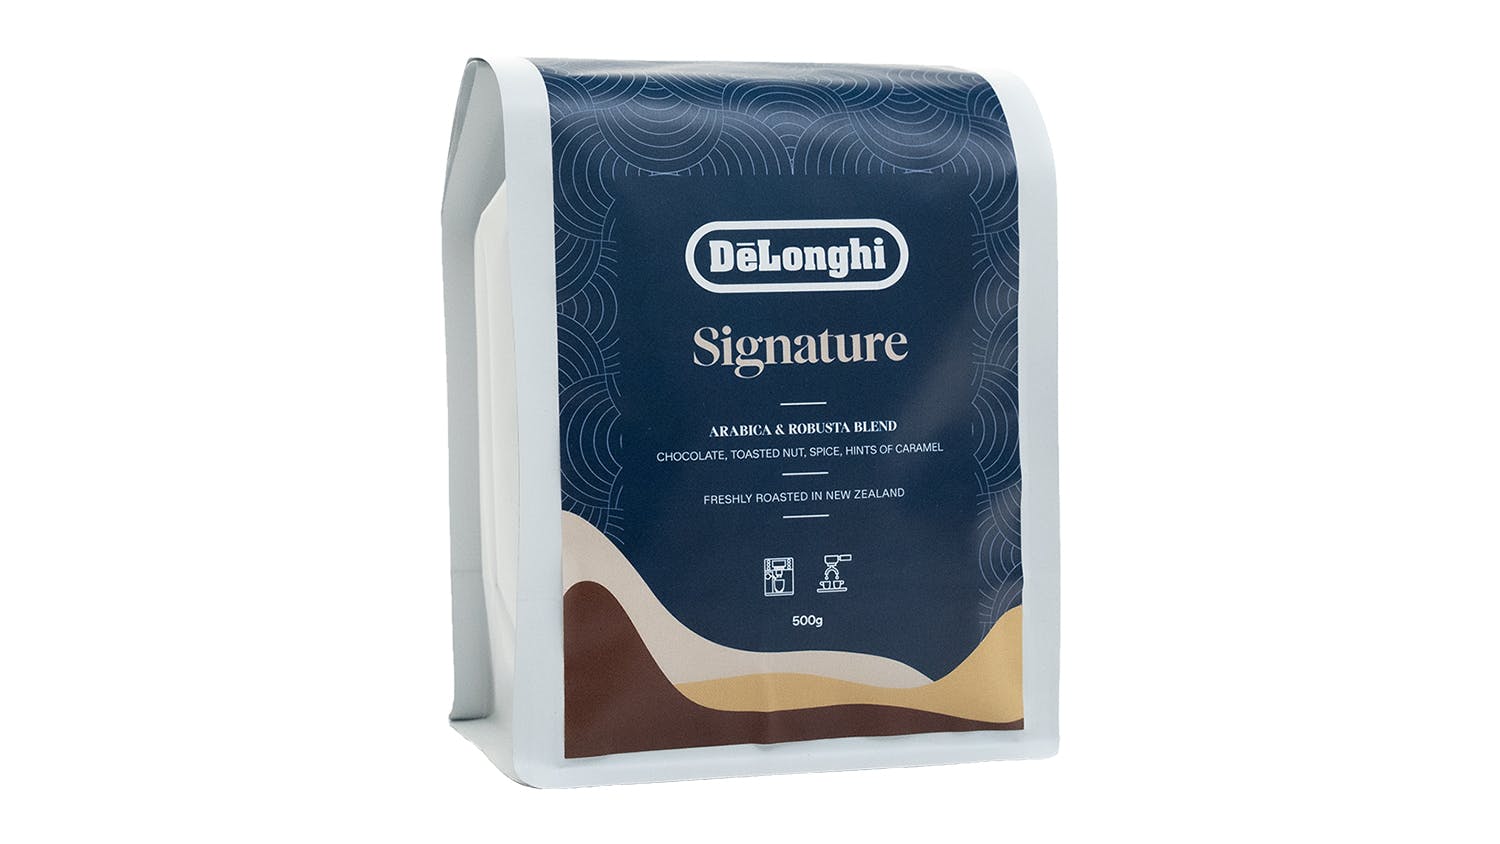 DeLonghi 500g NZ Roasted Signature Beans